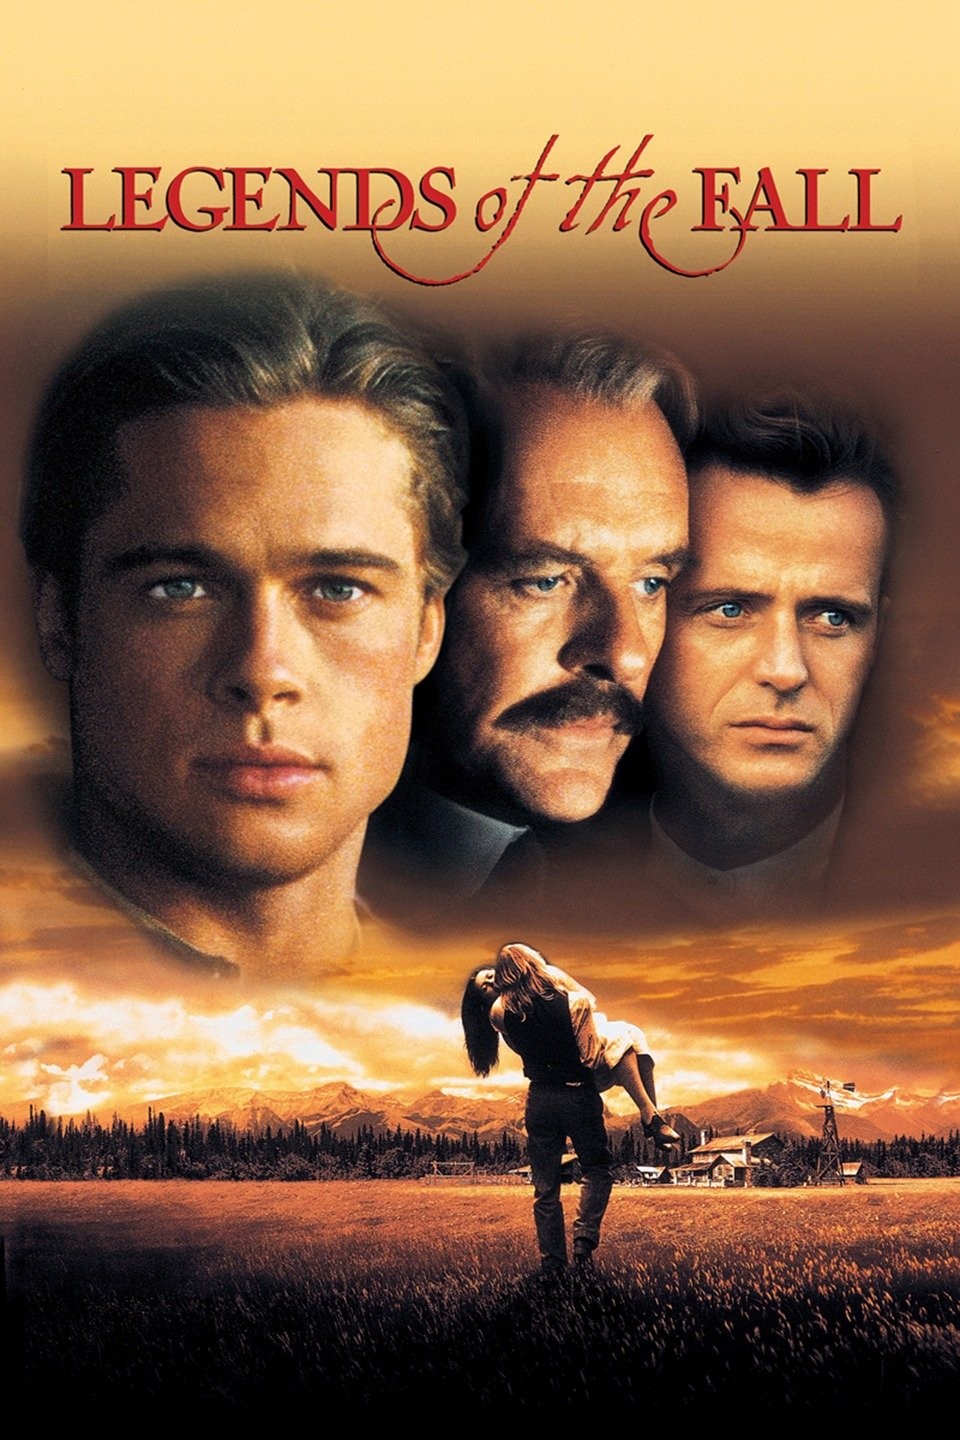 Brad Pitt Film: Legends Of The Fall (USA 1994) Characters: Tristan